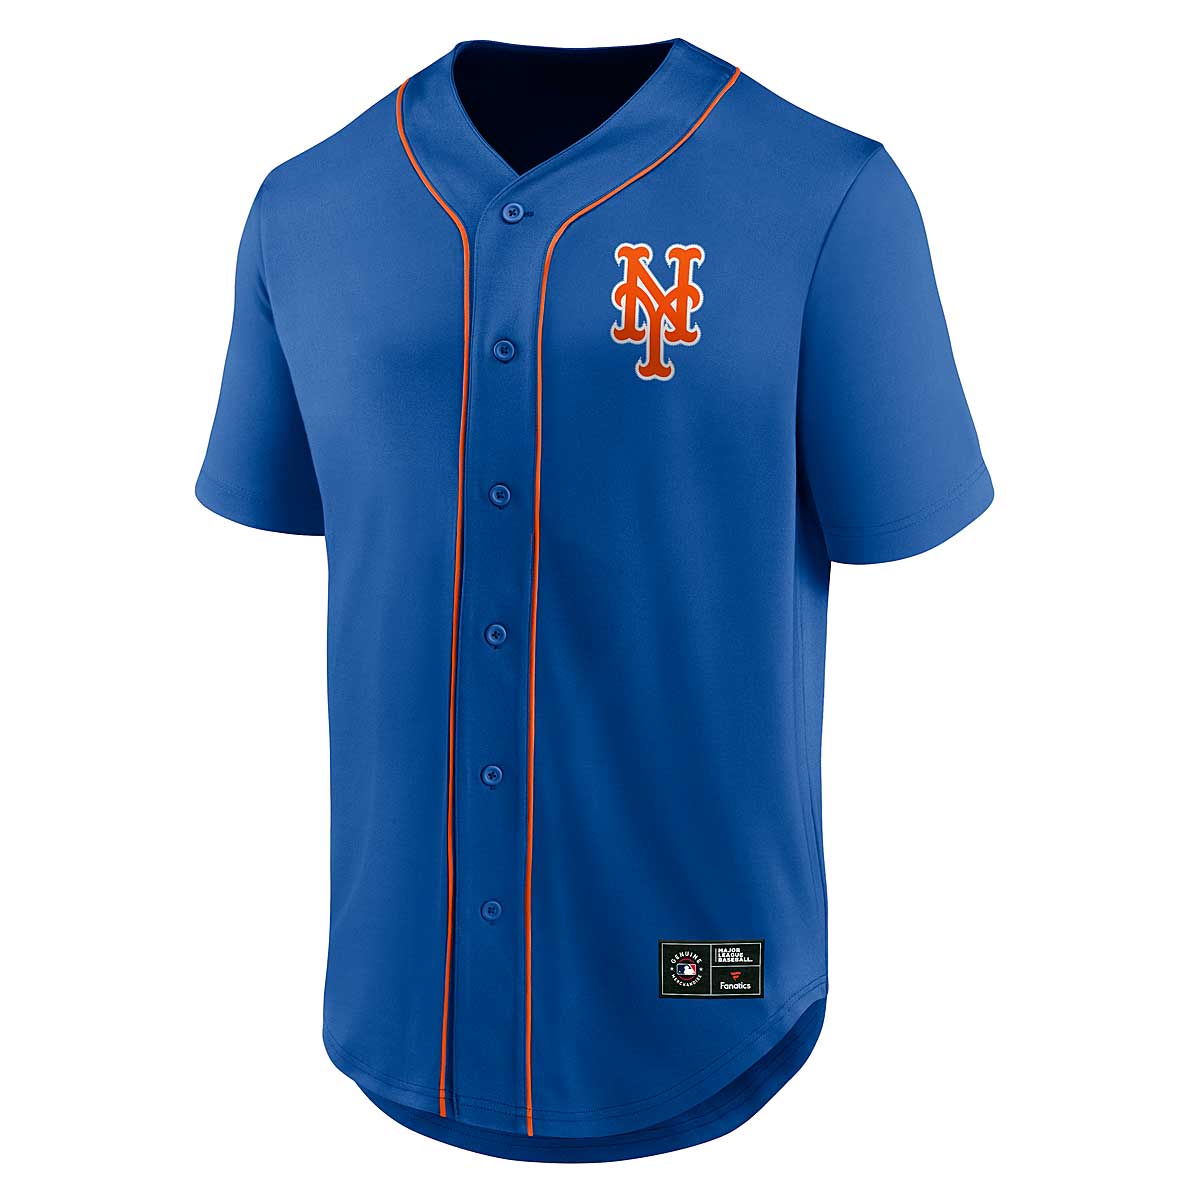 Image of Fanatics MLB New York Mets Foundation Jersey, Royal Blue/orange